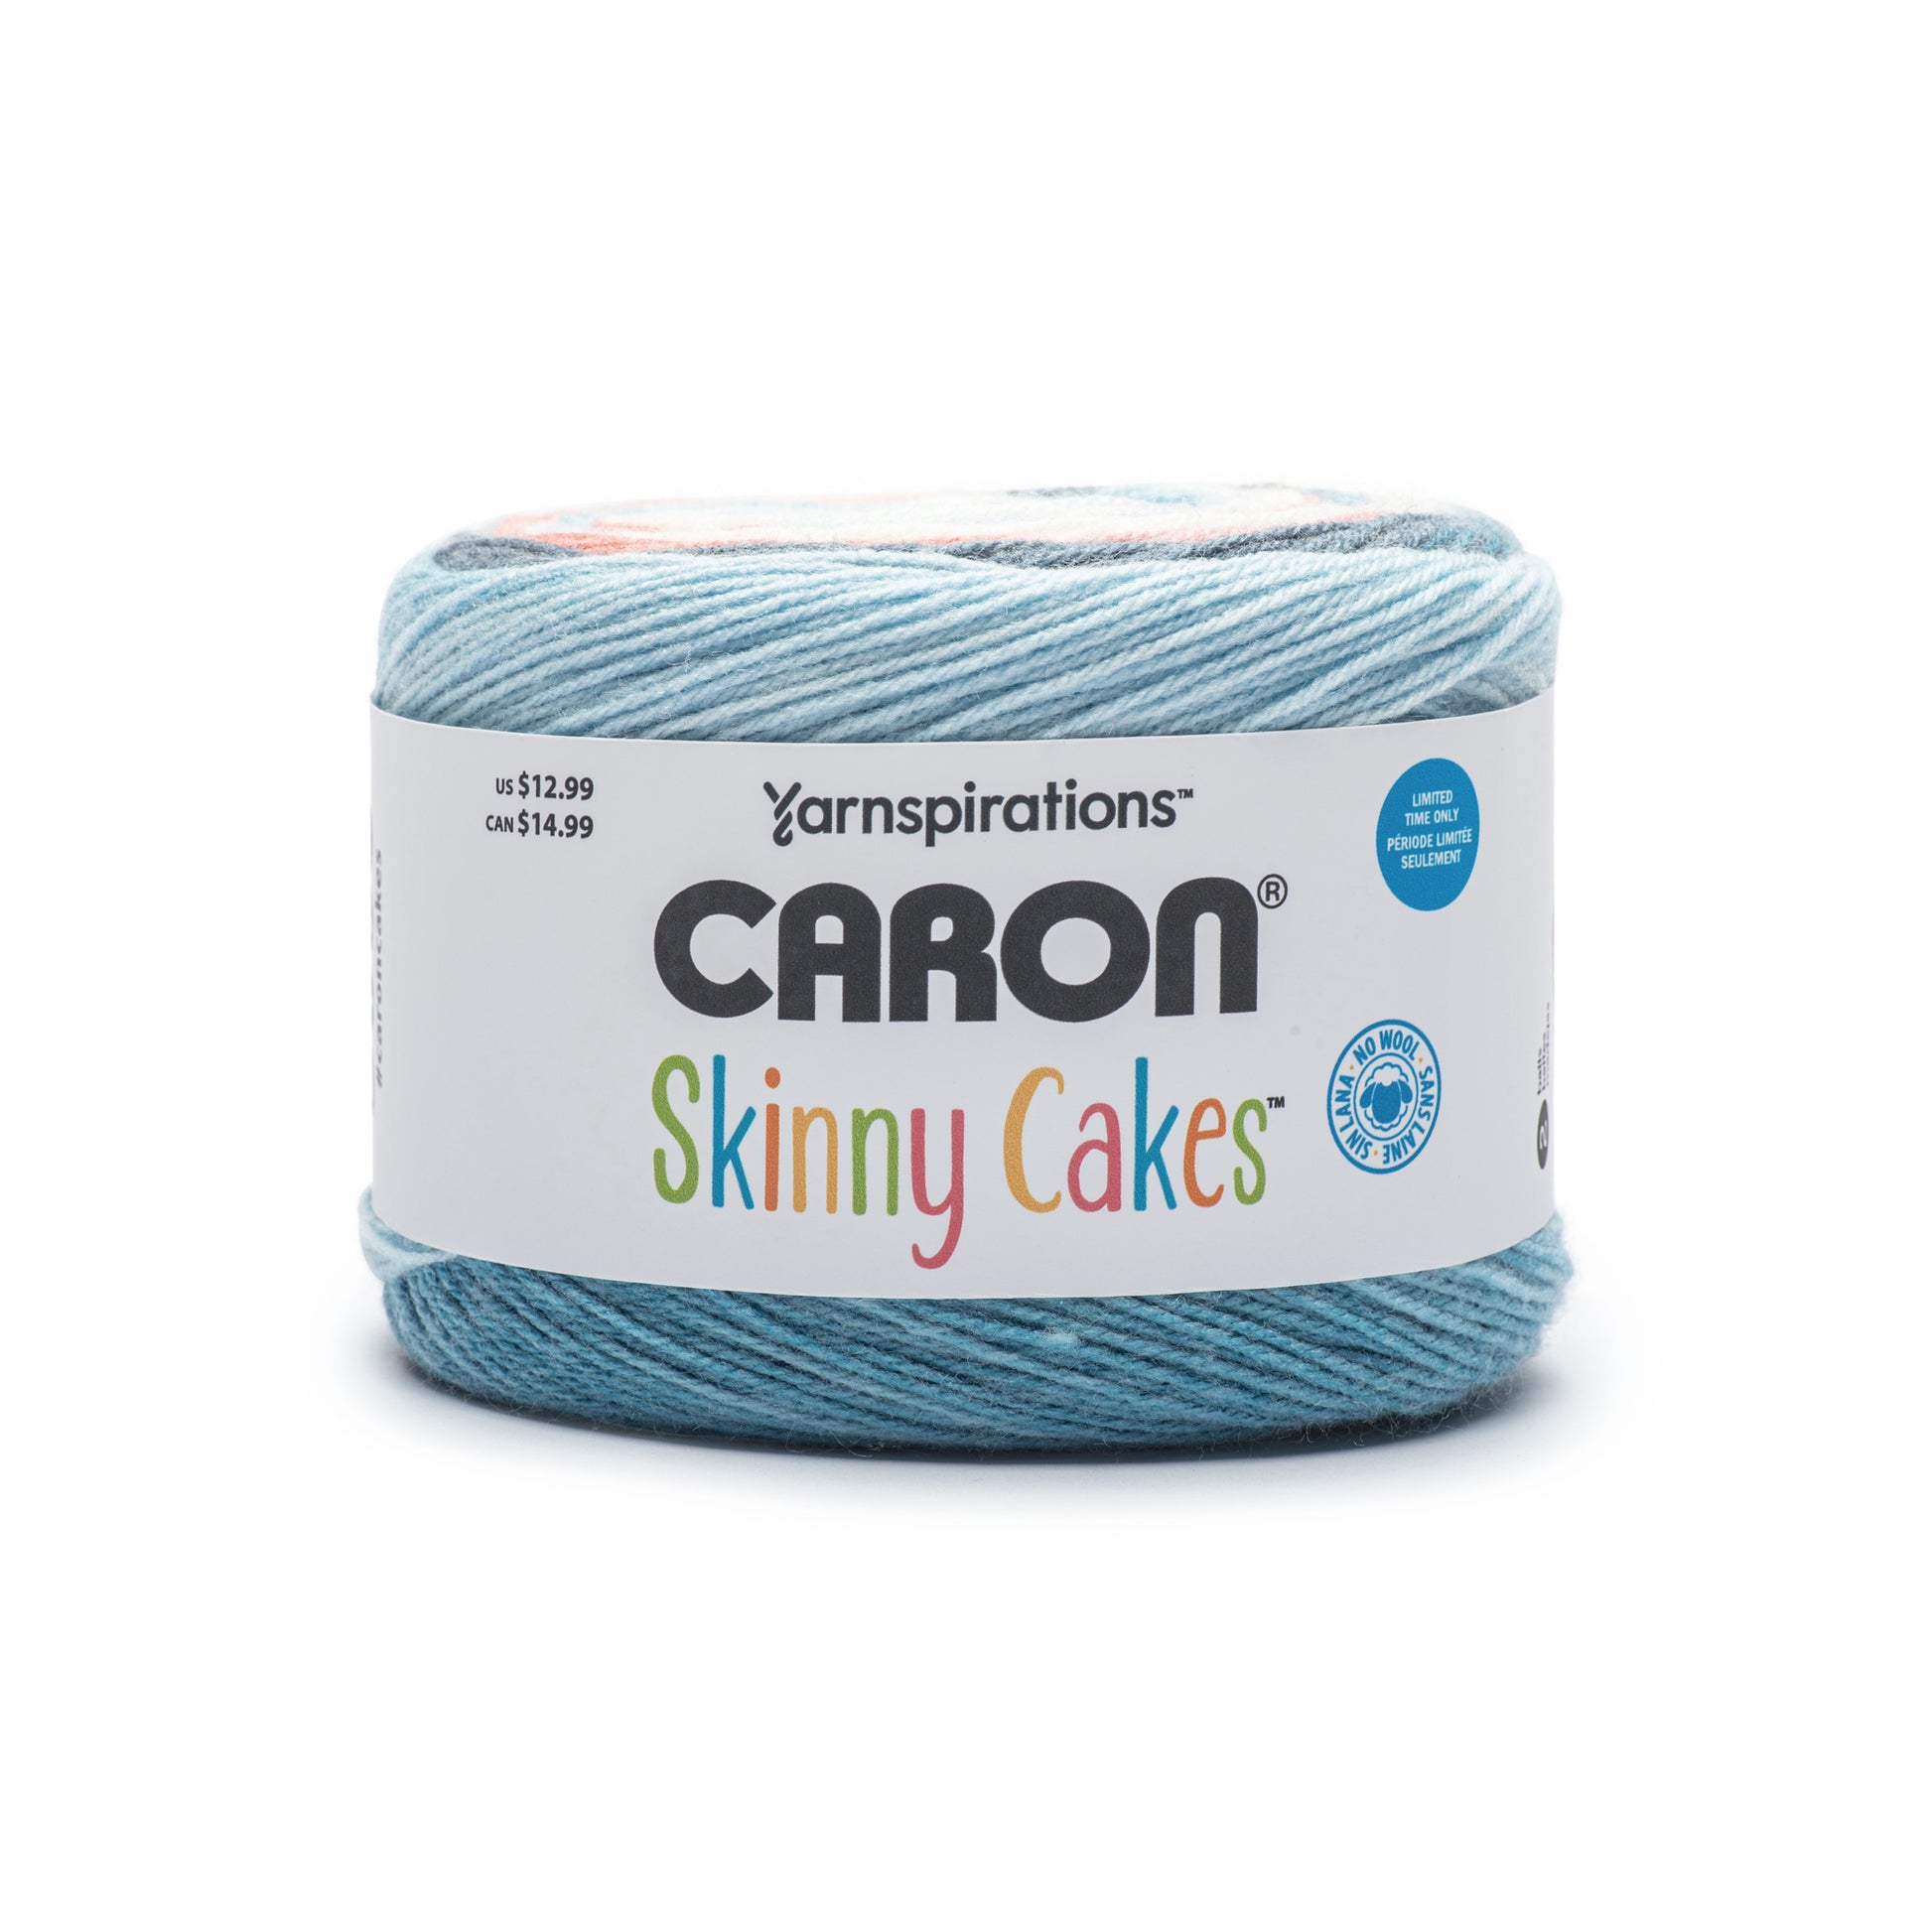 Caron Skinny Cakes Yarn (250g/8.8oz) - Retailer Exclusive